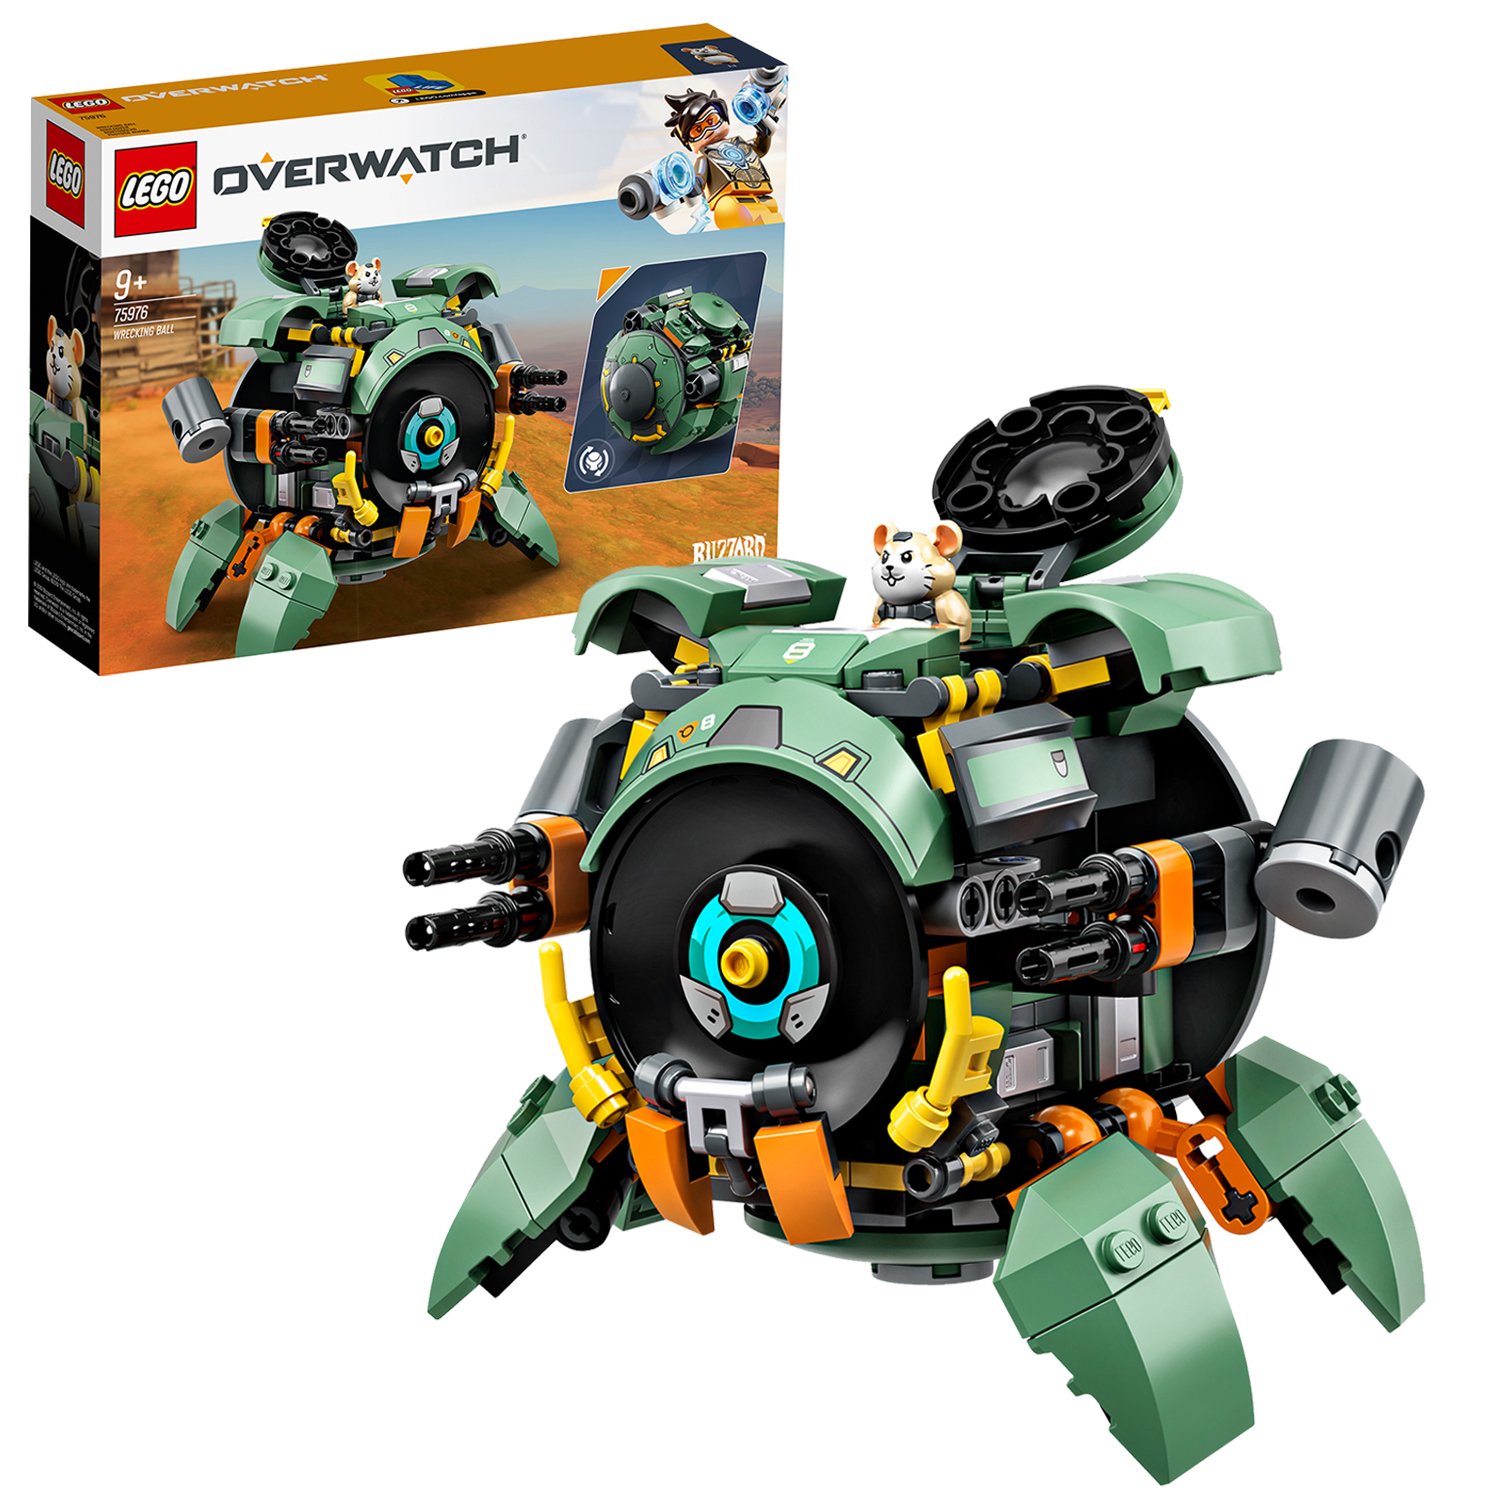 LEGO Overwatch Wrecking Ball Character Figure Set - 75976